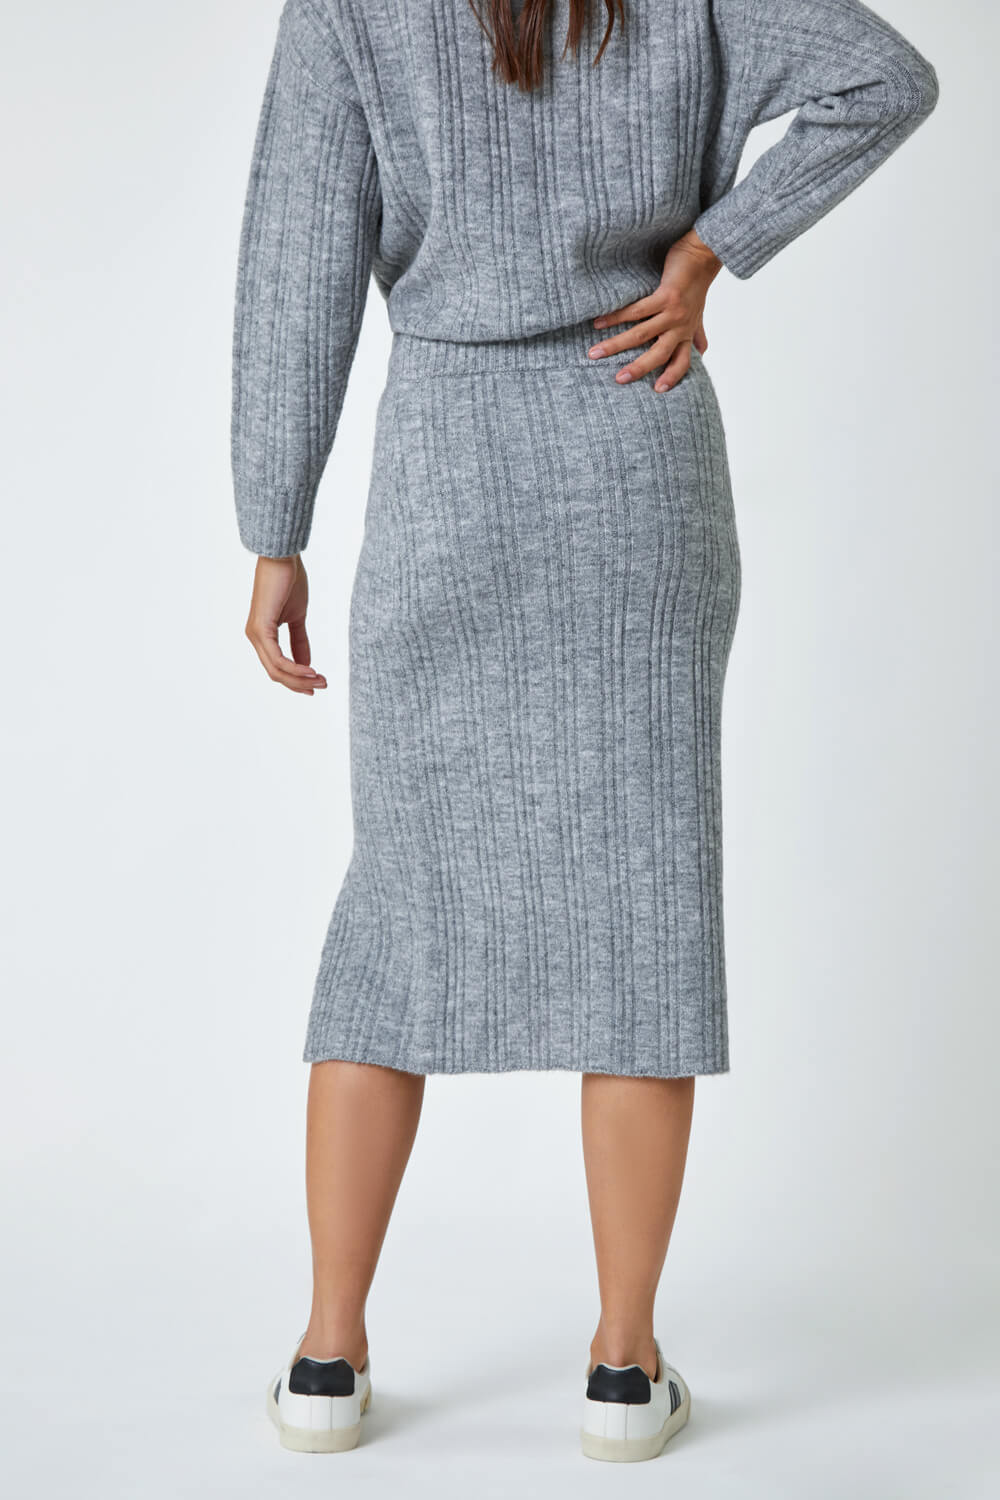 Grey Ribbed Side Split Knit Pencil Skirt, Image 3 of 5